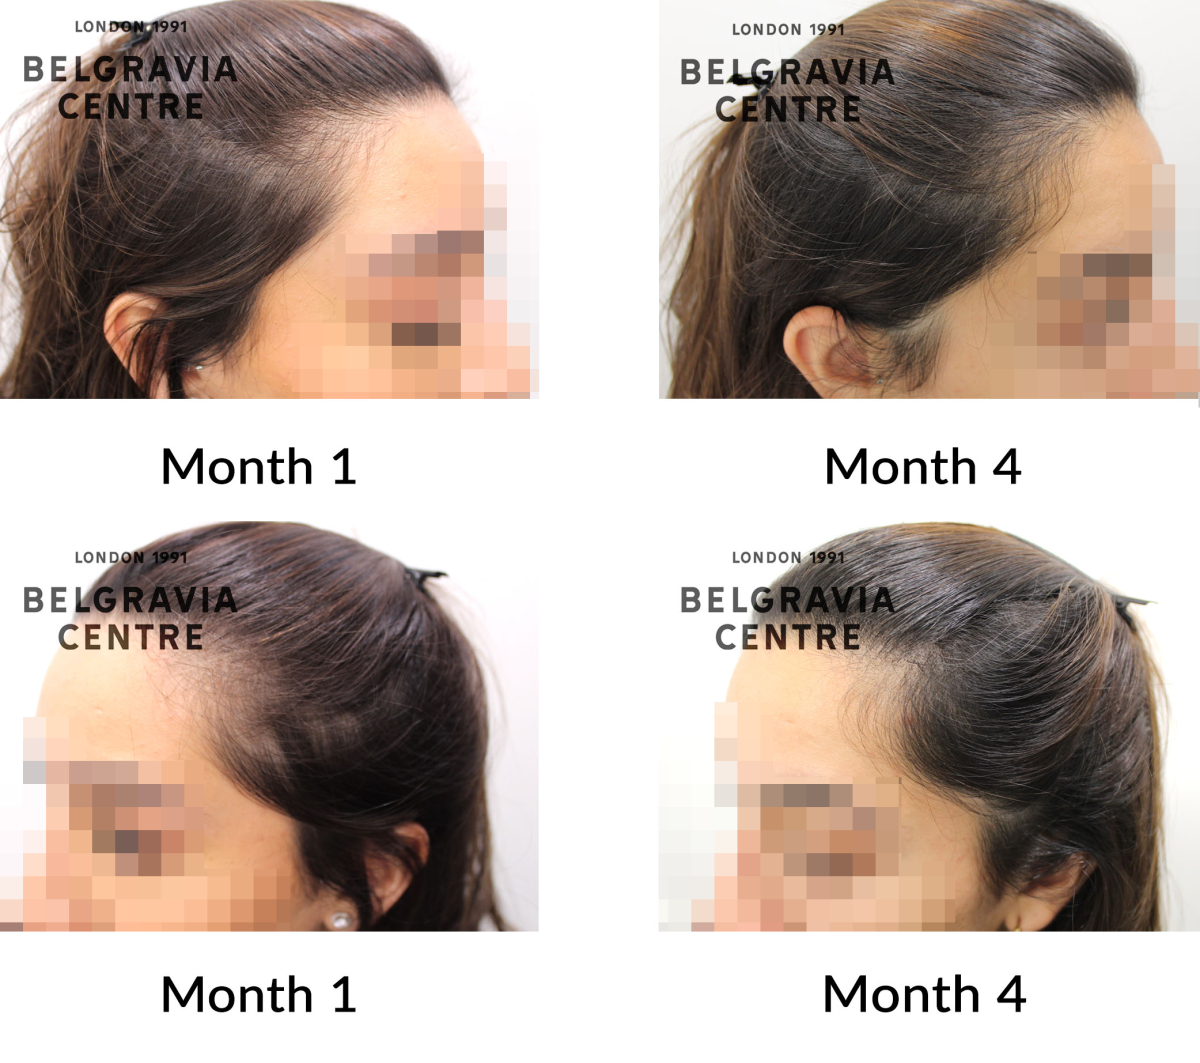 female pattern hair loss the belgravia centre 455567